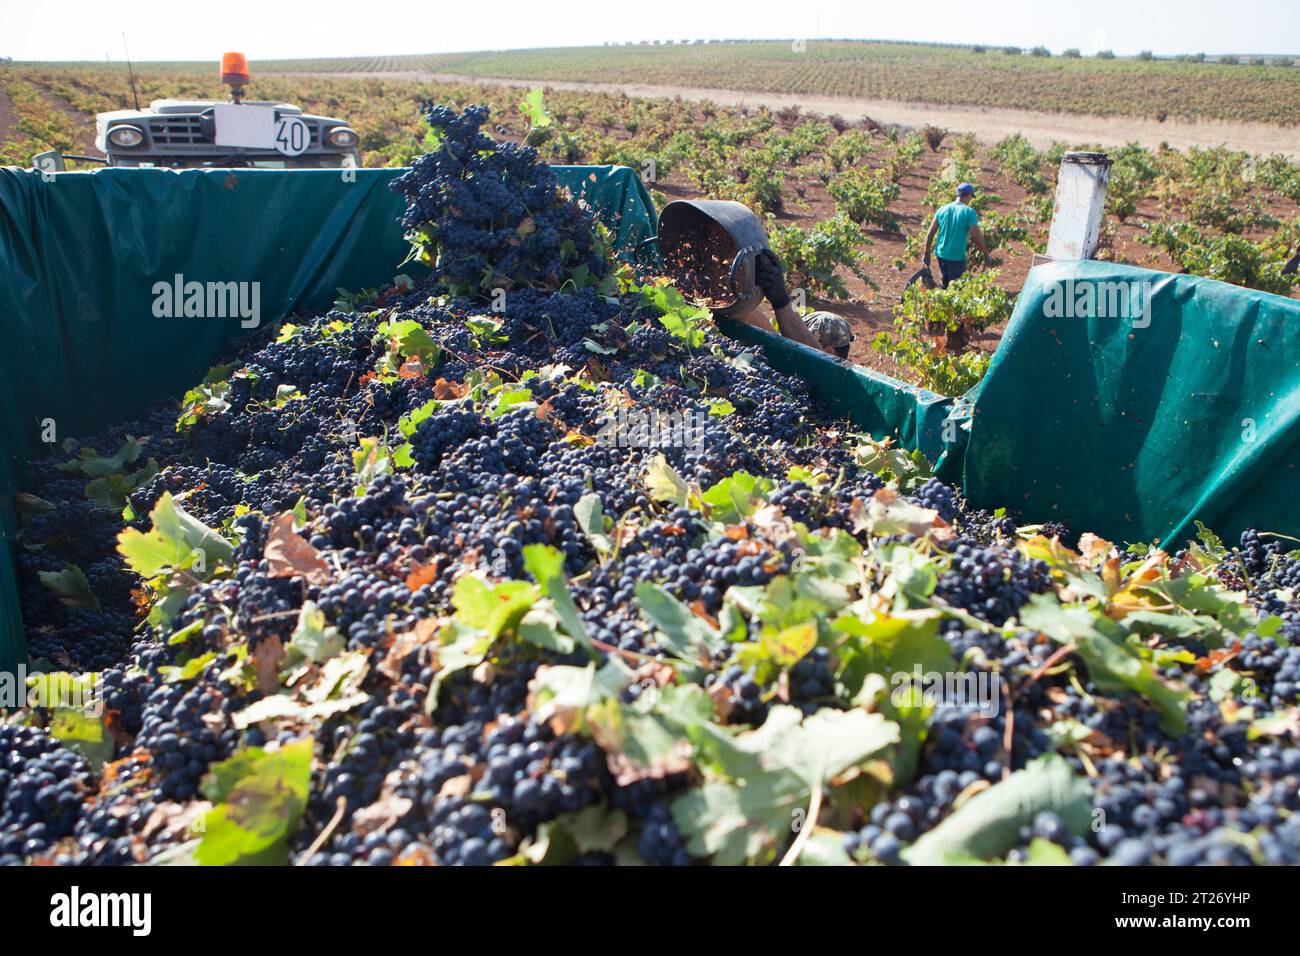 Laborer unloading his bucket into the trailer. Grape harvest season scene Stock Photo